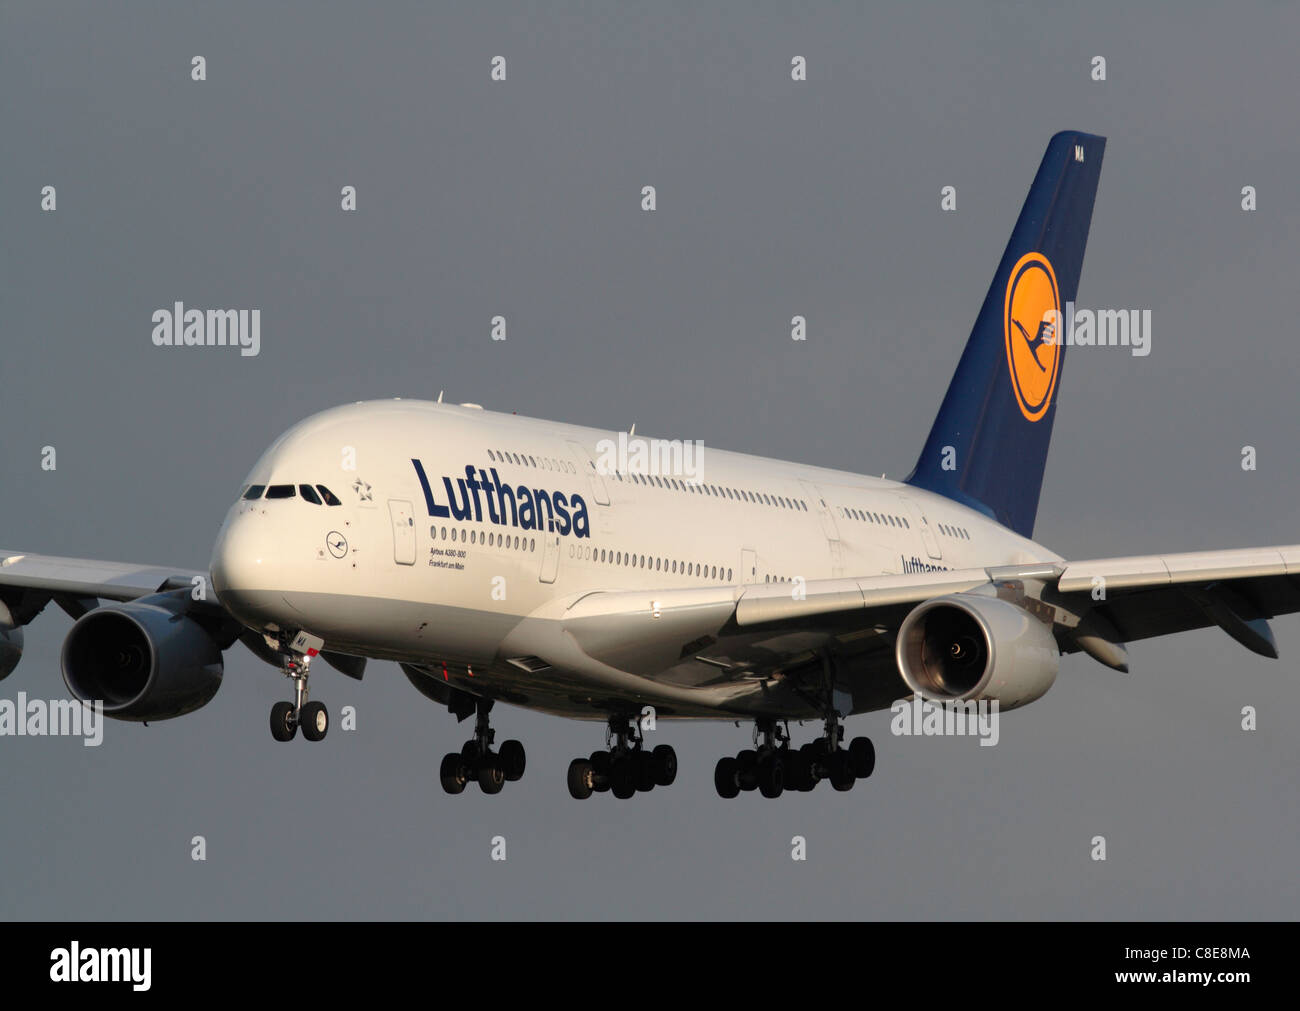 Lufthansa Airbus A380 double-decker widebody passenger jet plane, often called the Superjumbo, on final approach. Modern long haul air travel. Stock Photo